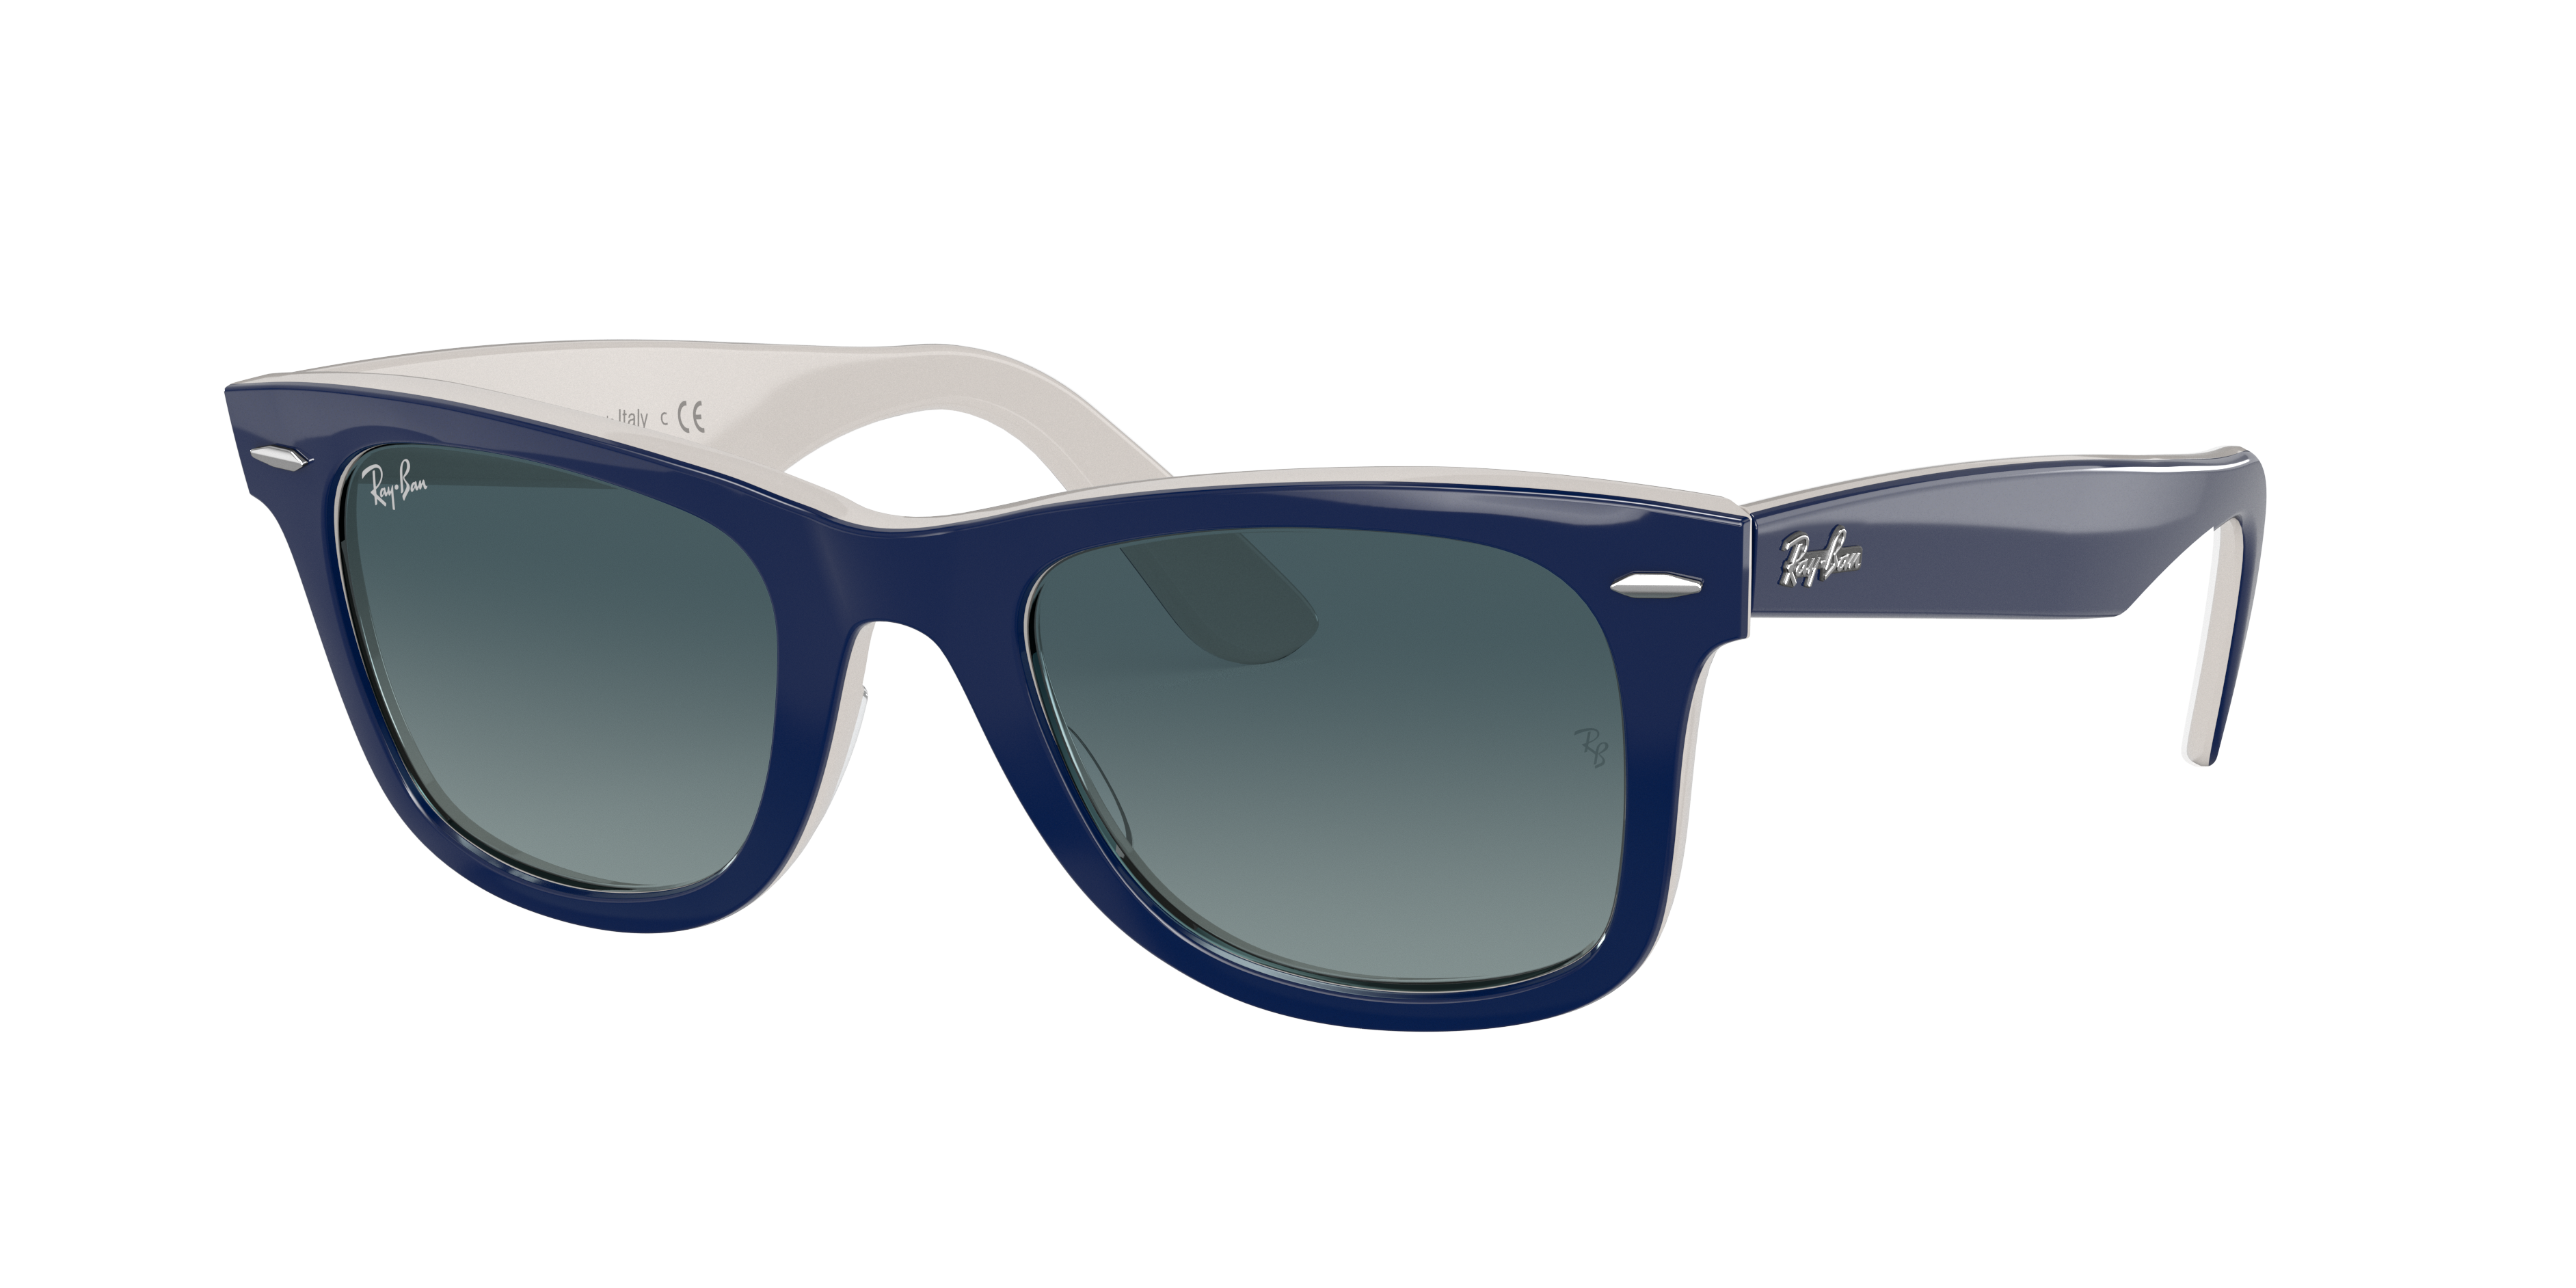 Bachelor opleiding Graf dam Original Wayfarer Bicolor Sunglasses in Blue and Blue | Ray-Ban®